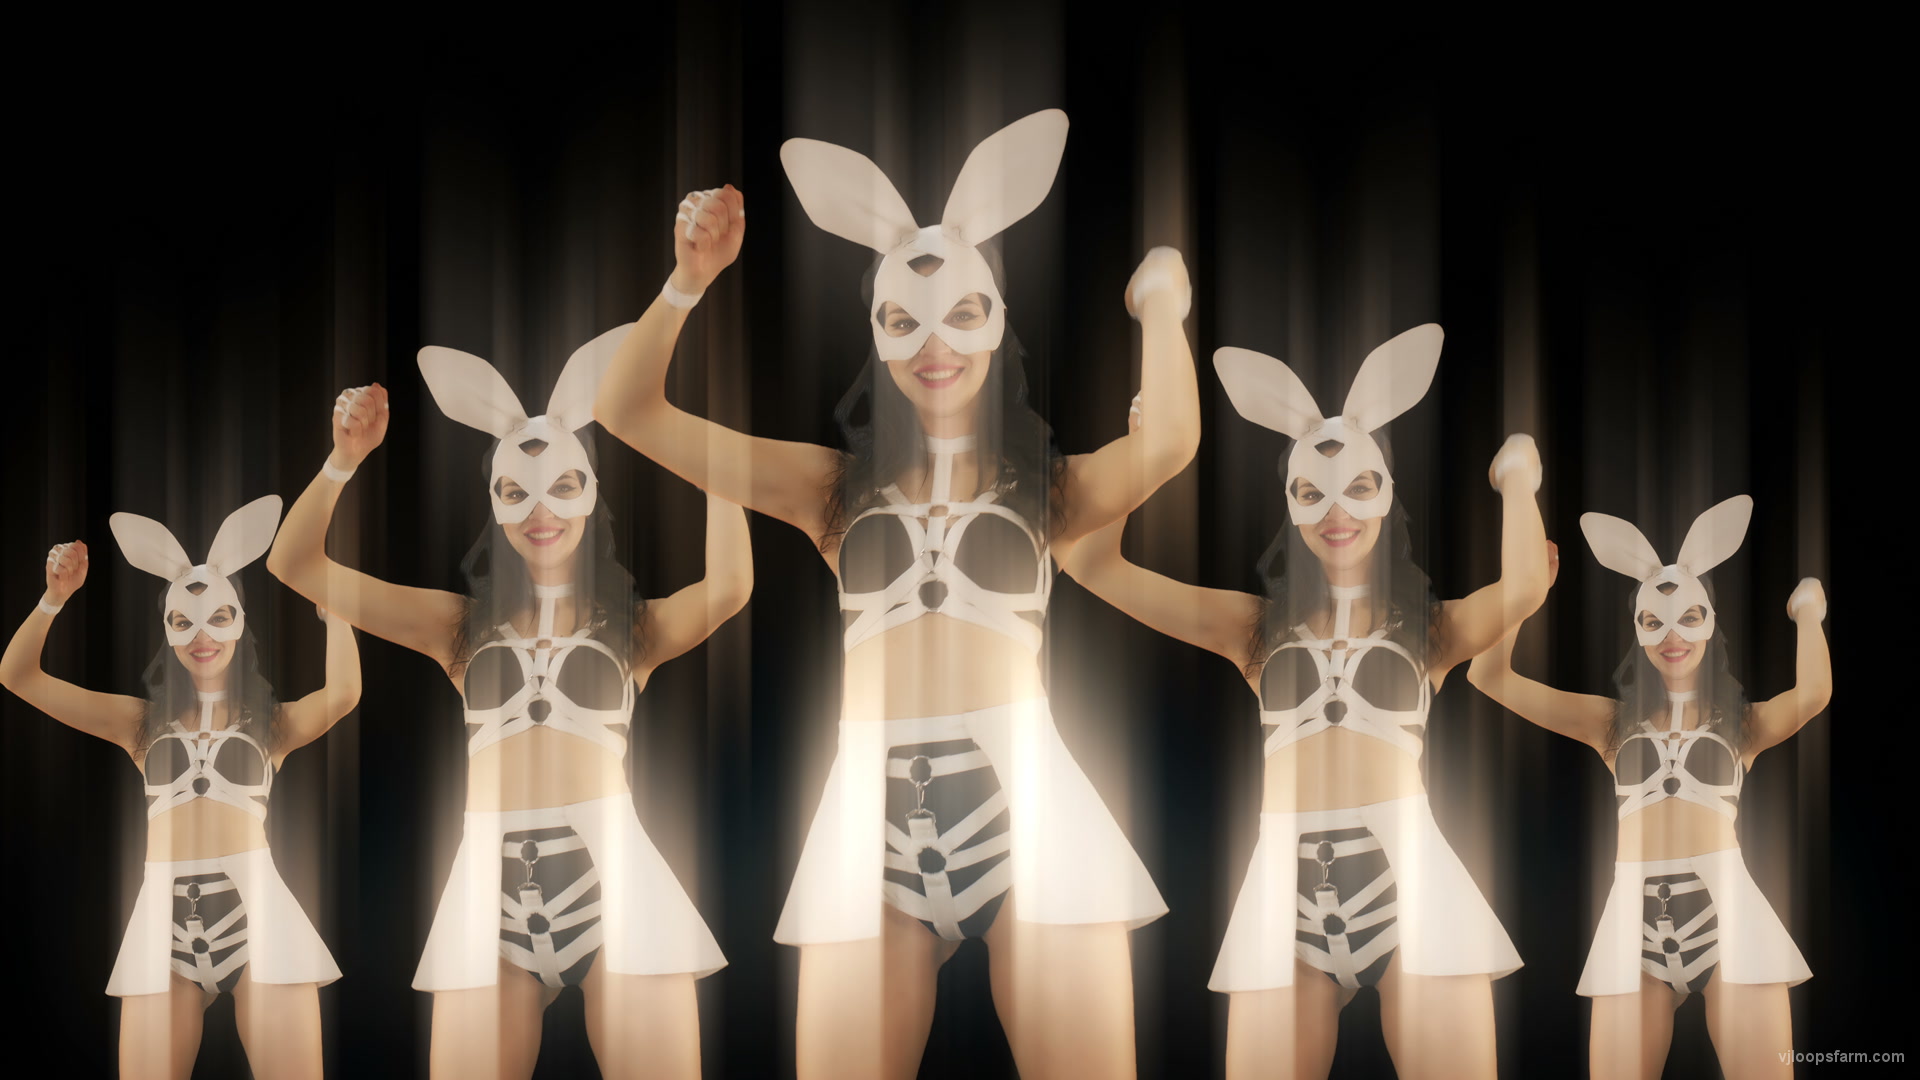 Bunny Girls Team Power Fist Beat Kombat 4K Video Art VJ Loop